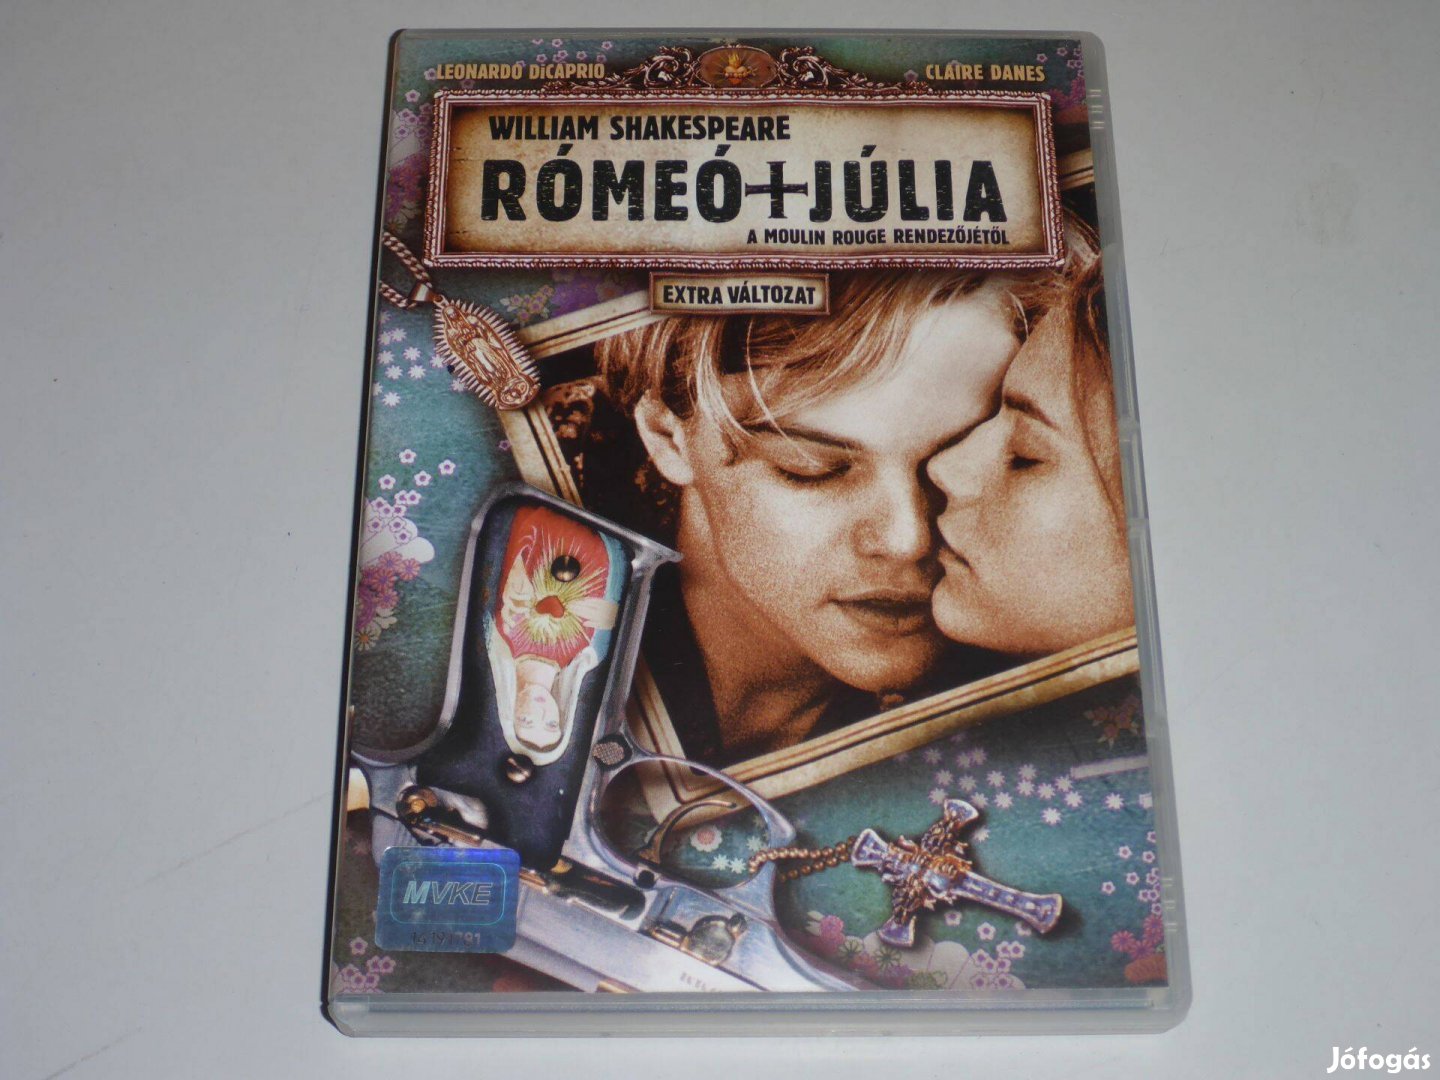 Rómeó + Júlia DVD film